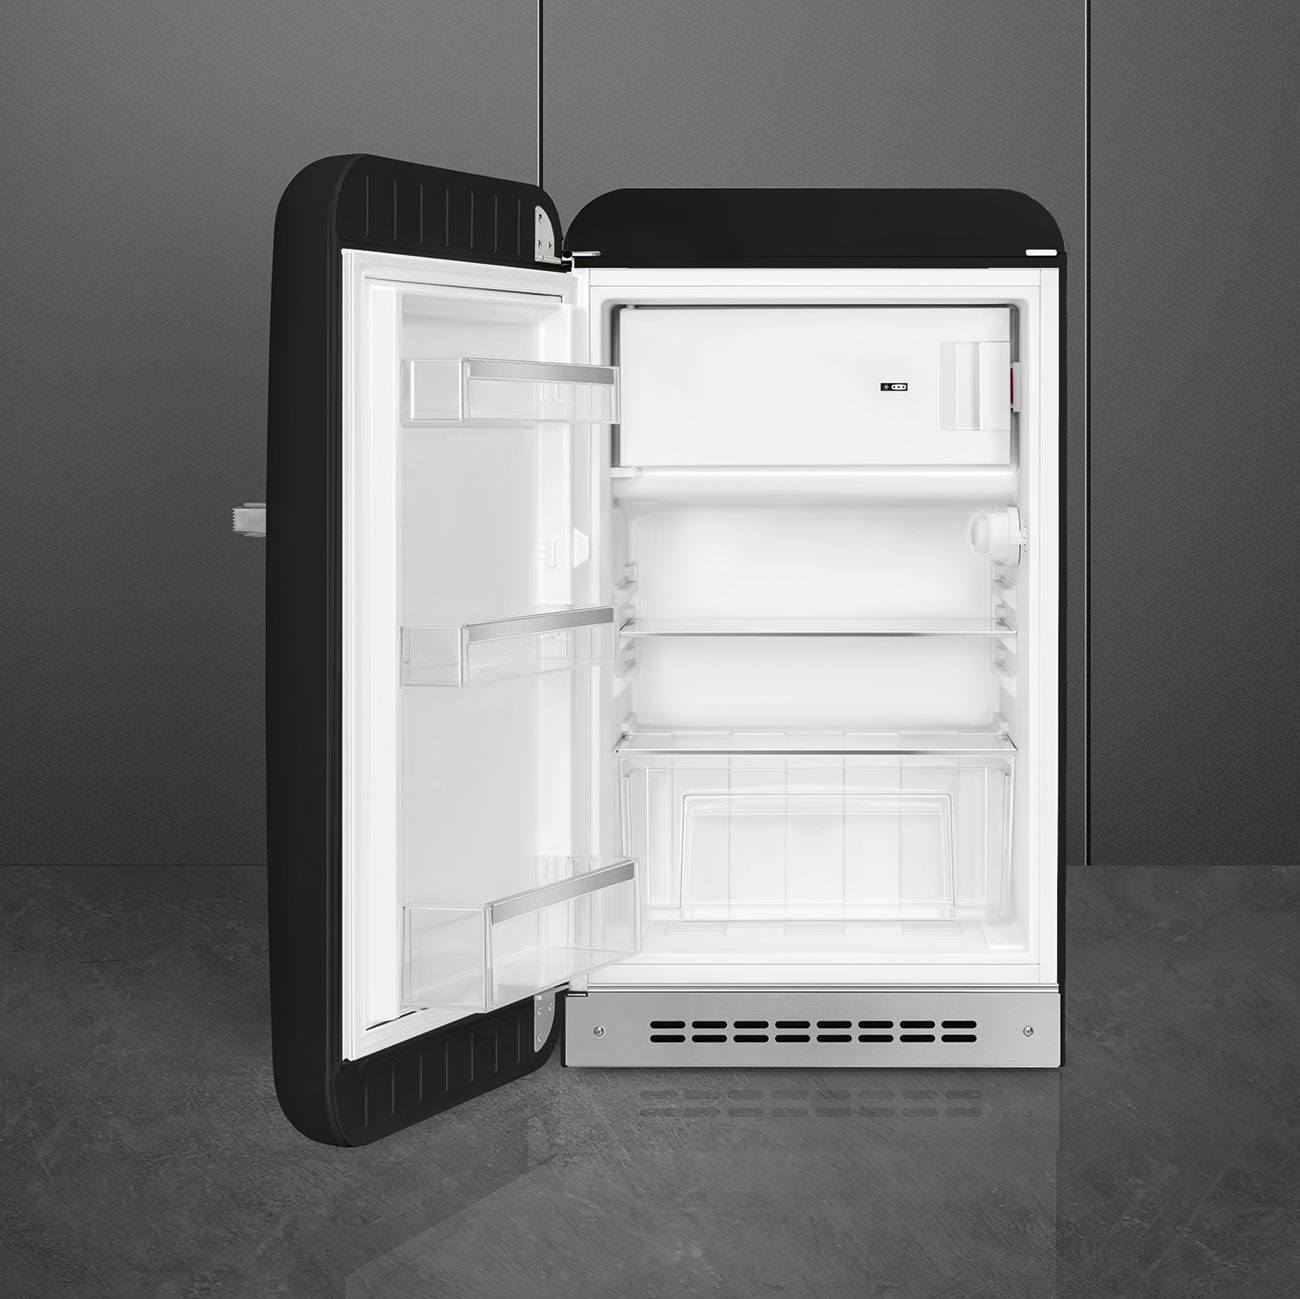 SMEG FAB10LBL5 vrijstaande koelkast met vriesvak - 96cm